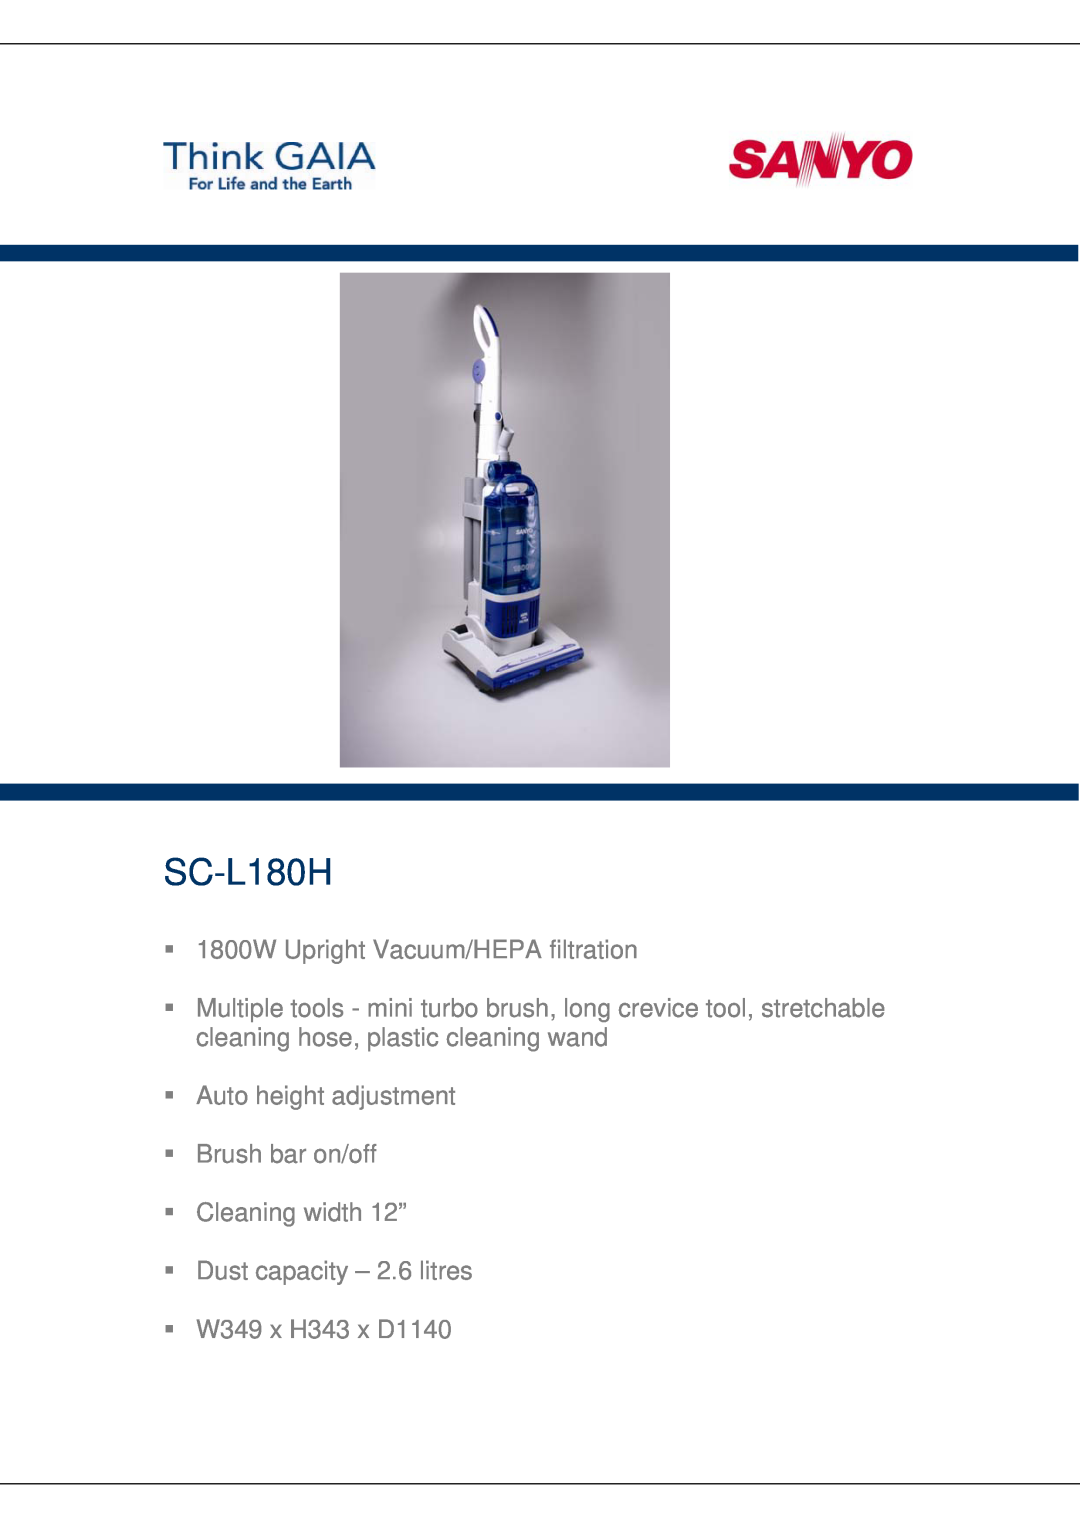 Sanyo SC-L180H manual 1800W Upright Vacuum/HEPA filtration, Auto height adjustment Brush bar on/off, W349 x H343 x D1140 